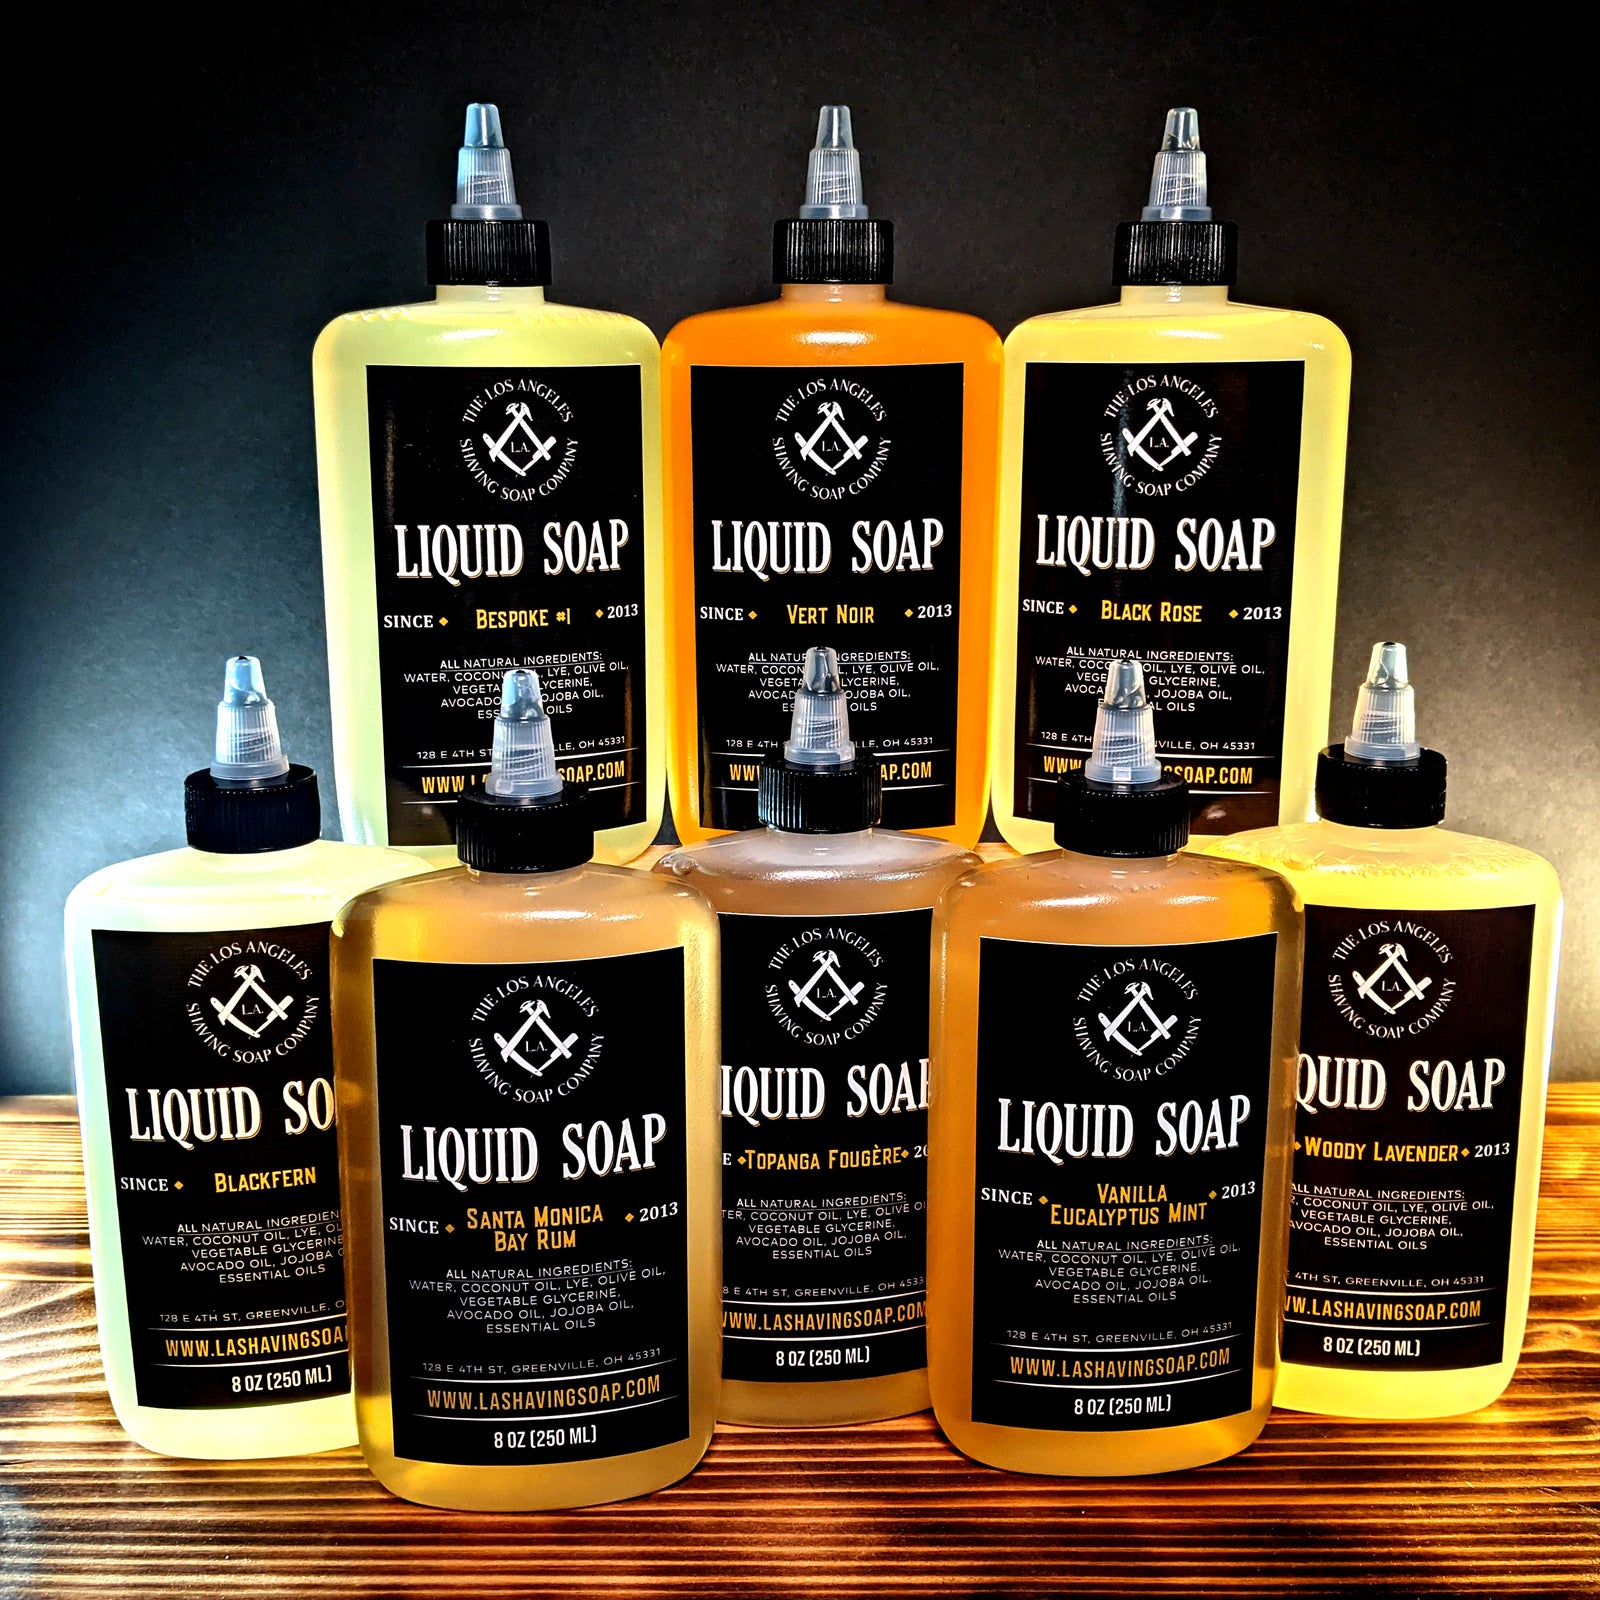 Liquid Castile Soap by LA Shaving Soap Co